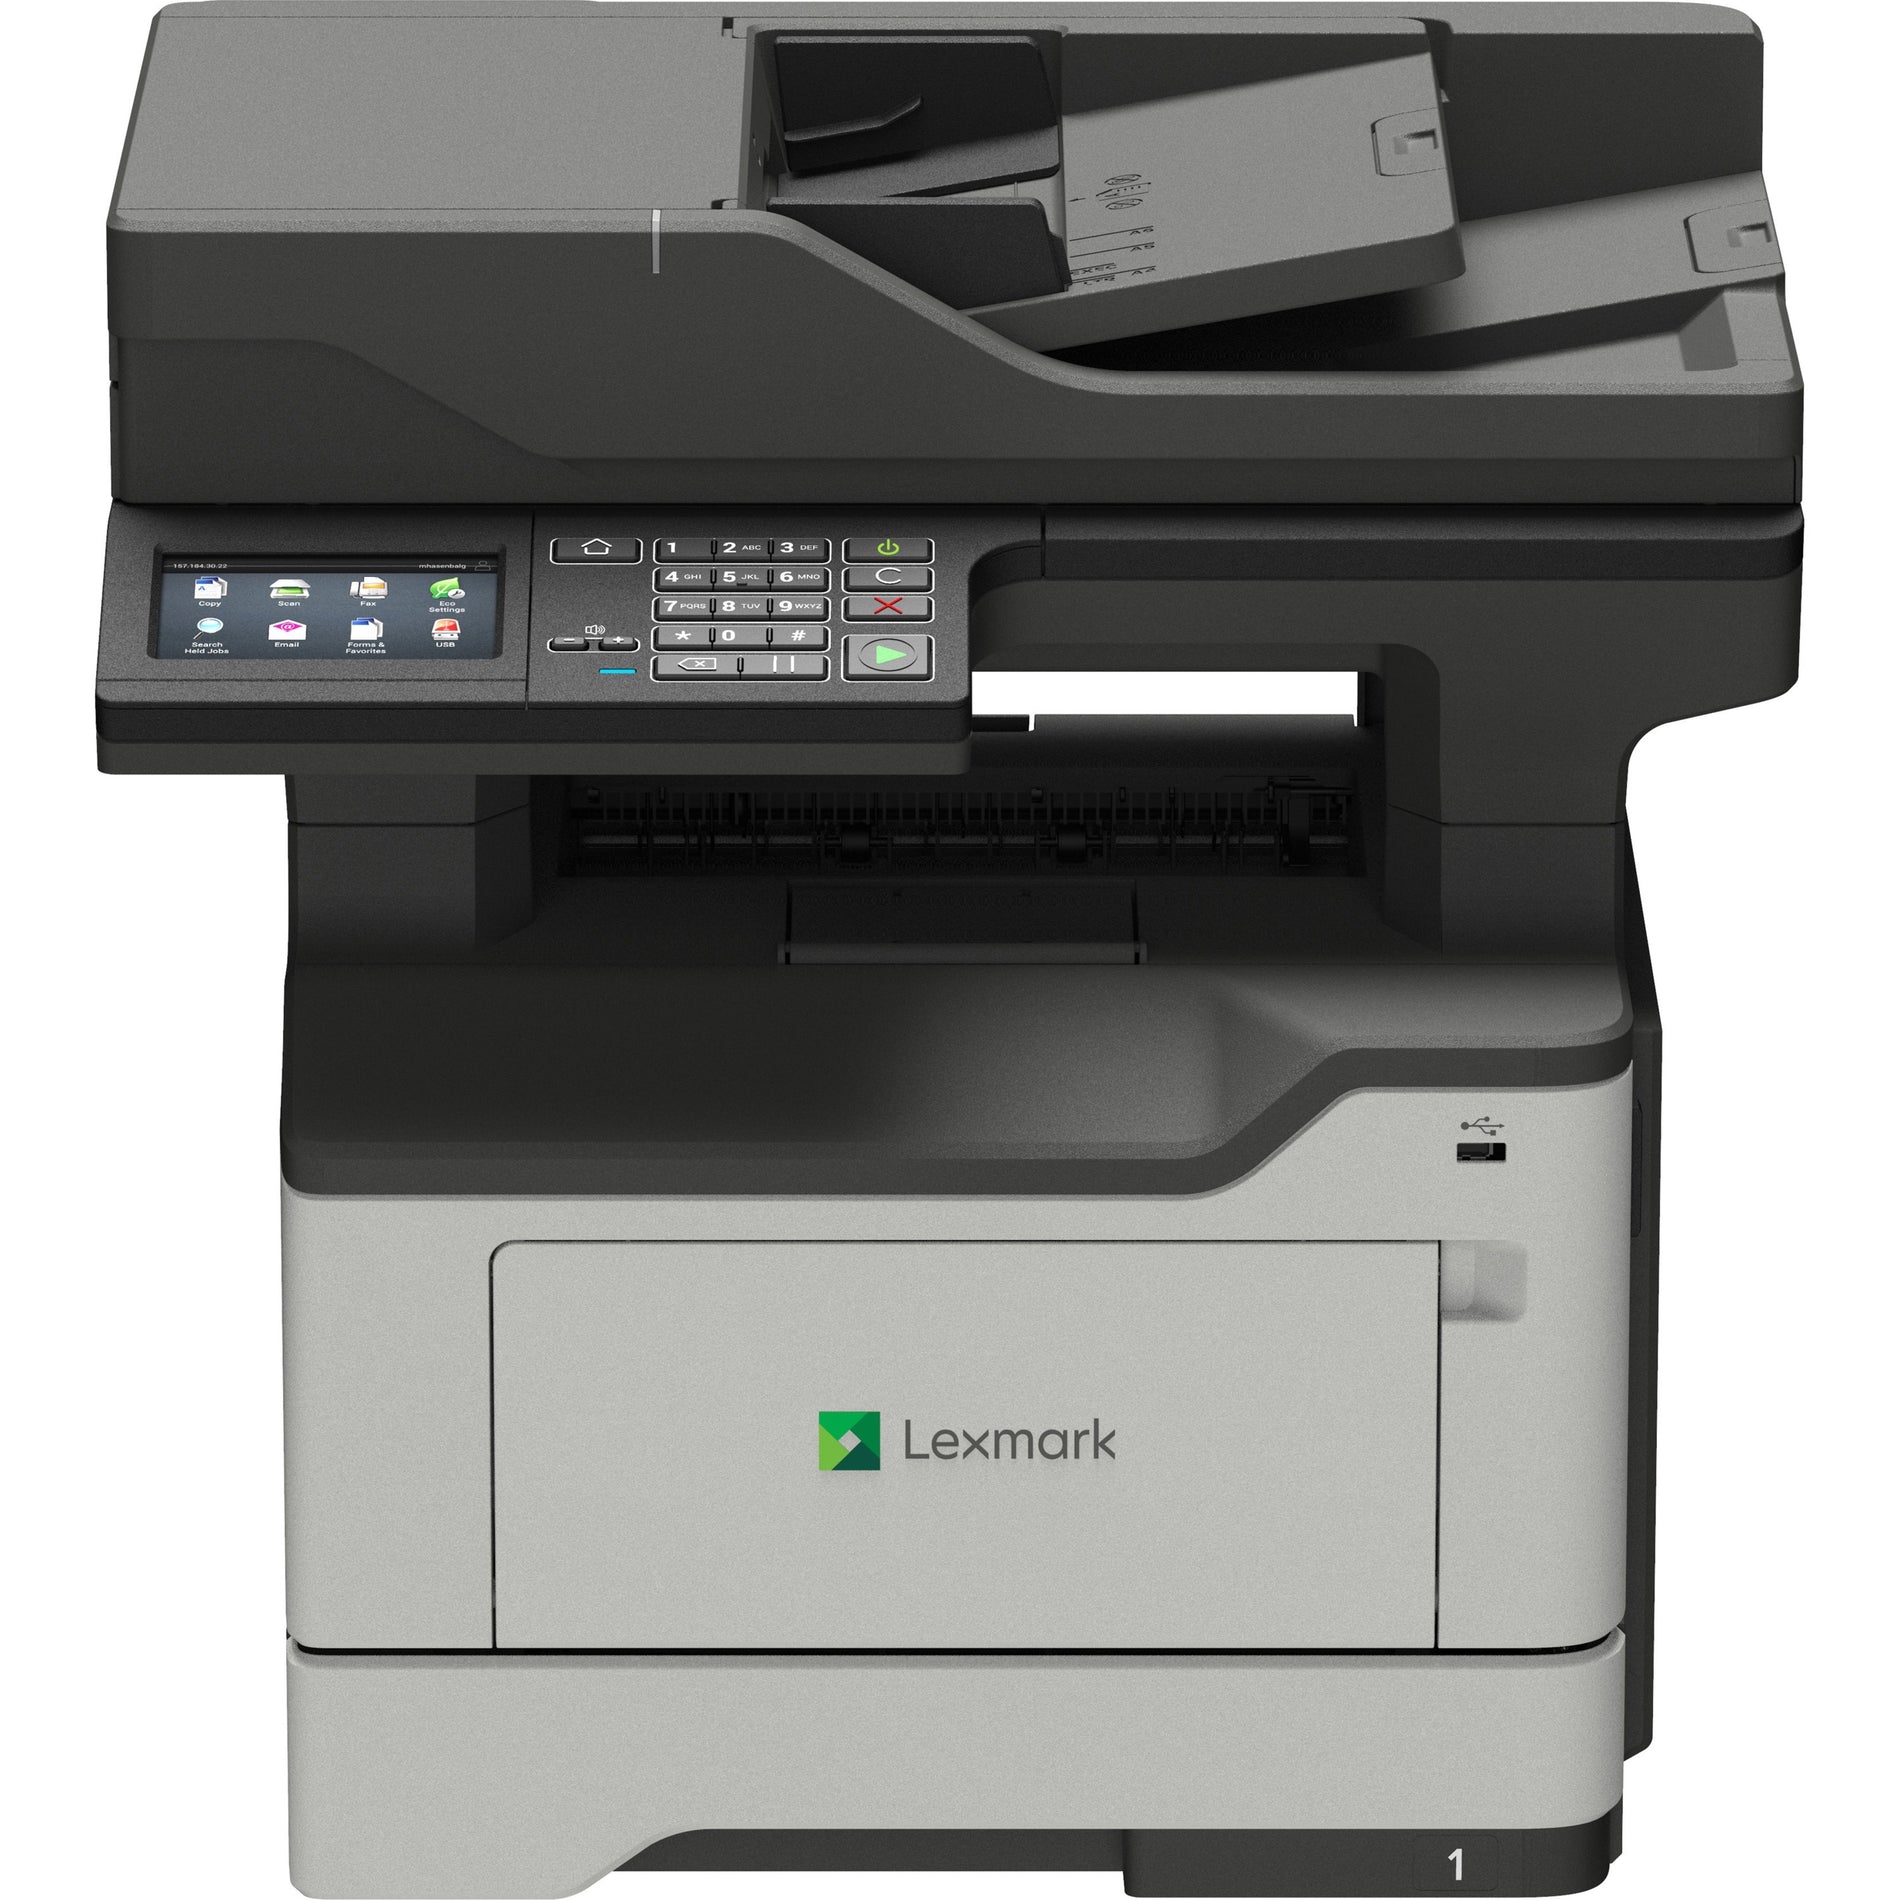 Lexmark 36S0800 MX521de Laser Multifunction Printer, Monochrome, Flatbed Scanner, Color Scan, 1200 dpi, Windows/Mac/Linux Compatible, 1 Year Warranty